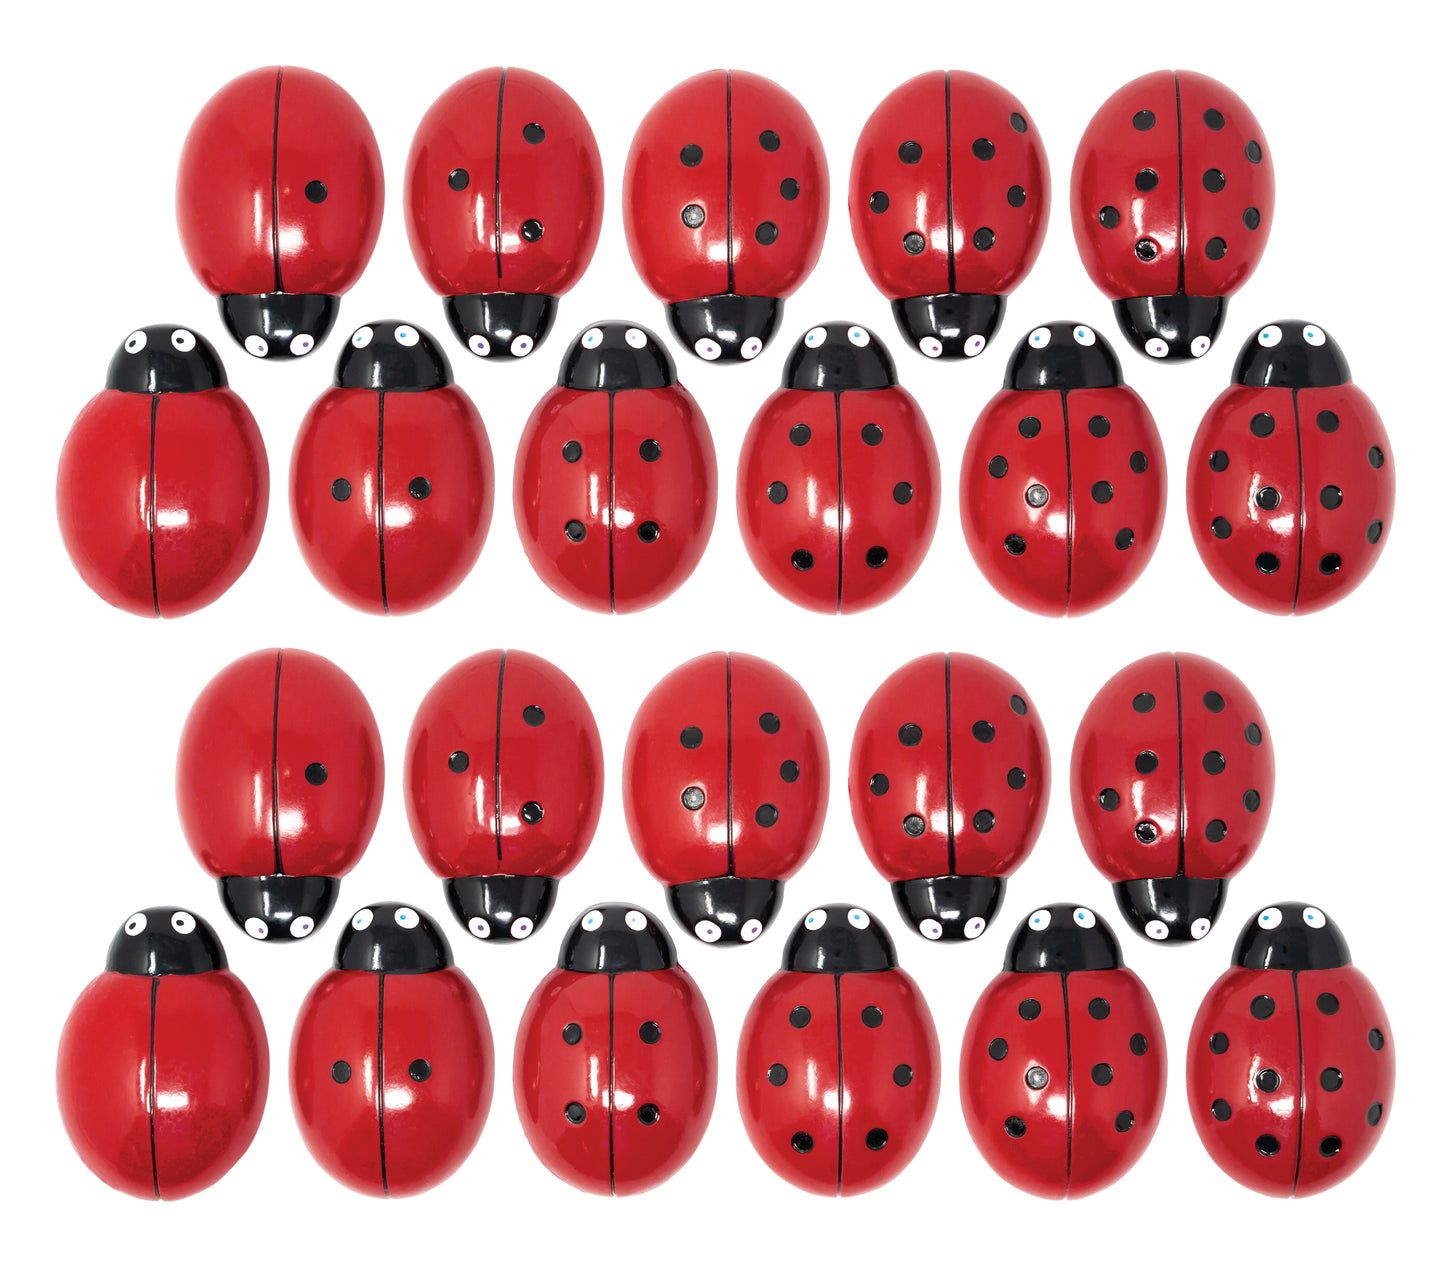 Ladybug Counting Stones (22 stenen)